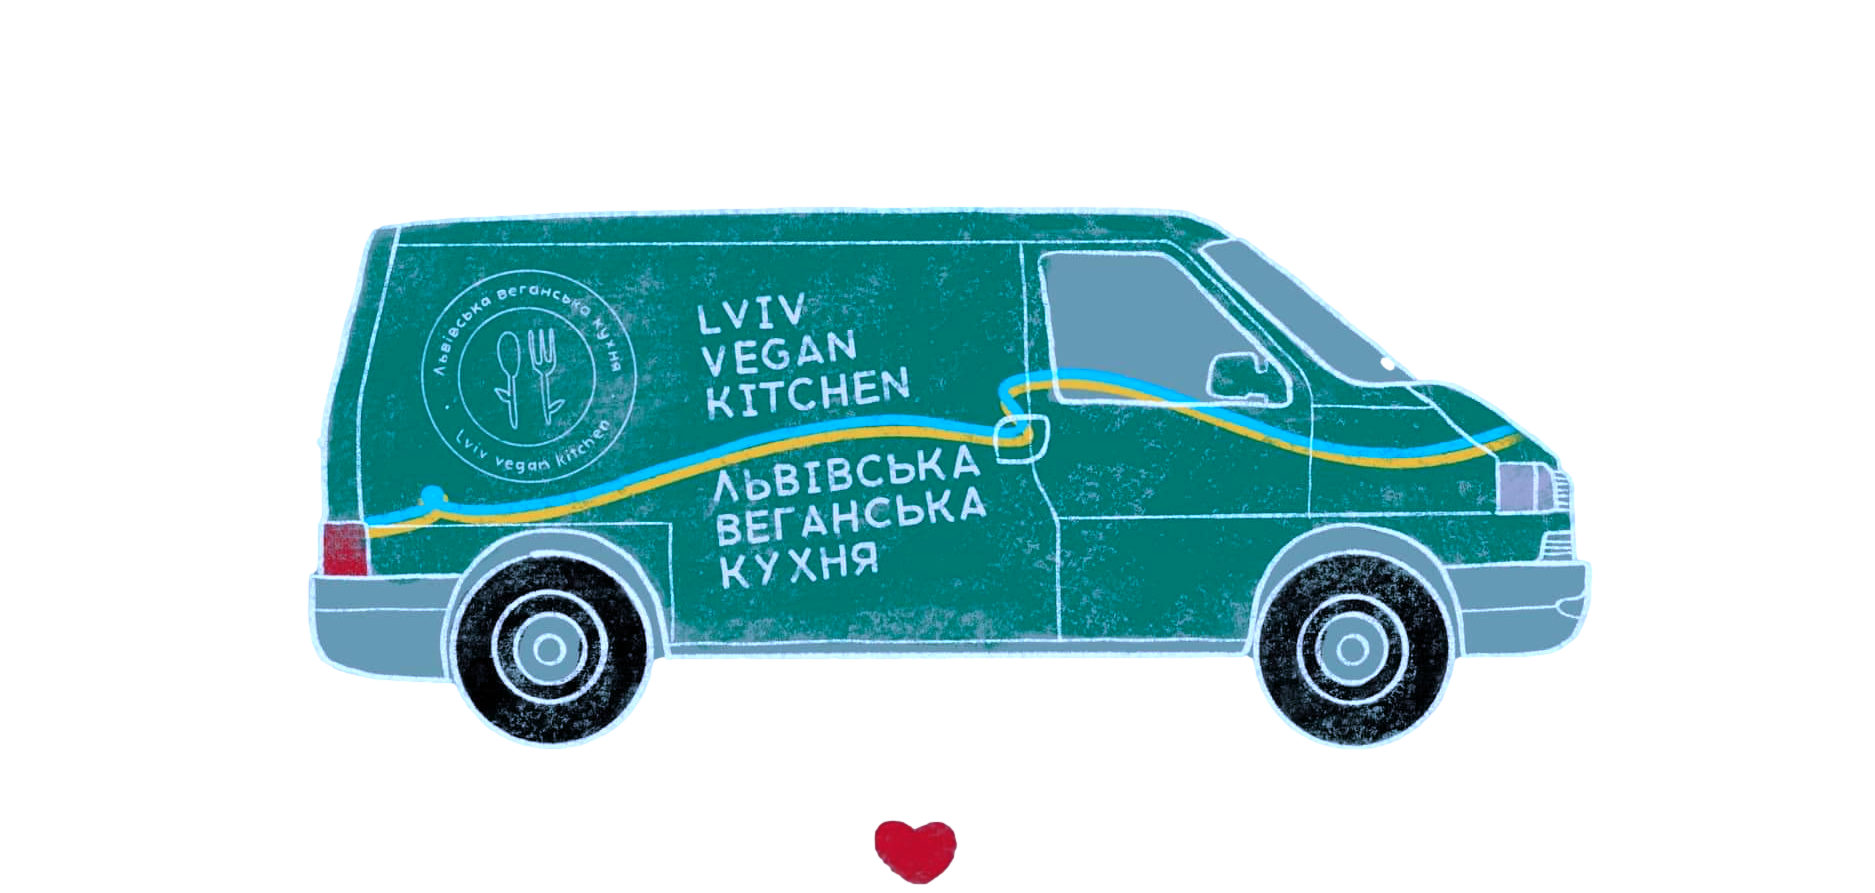 Lviv Vegan Kitchen Van Illustration More Teal 1 